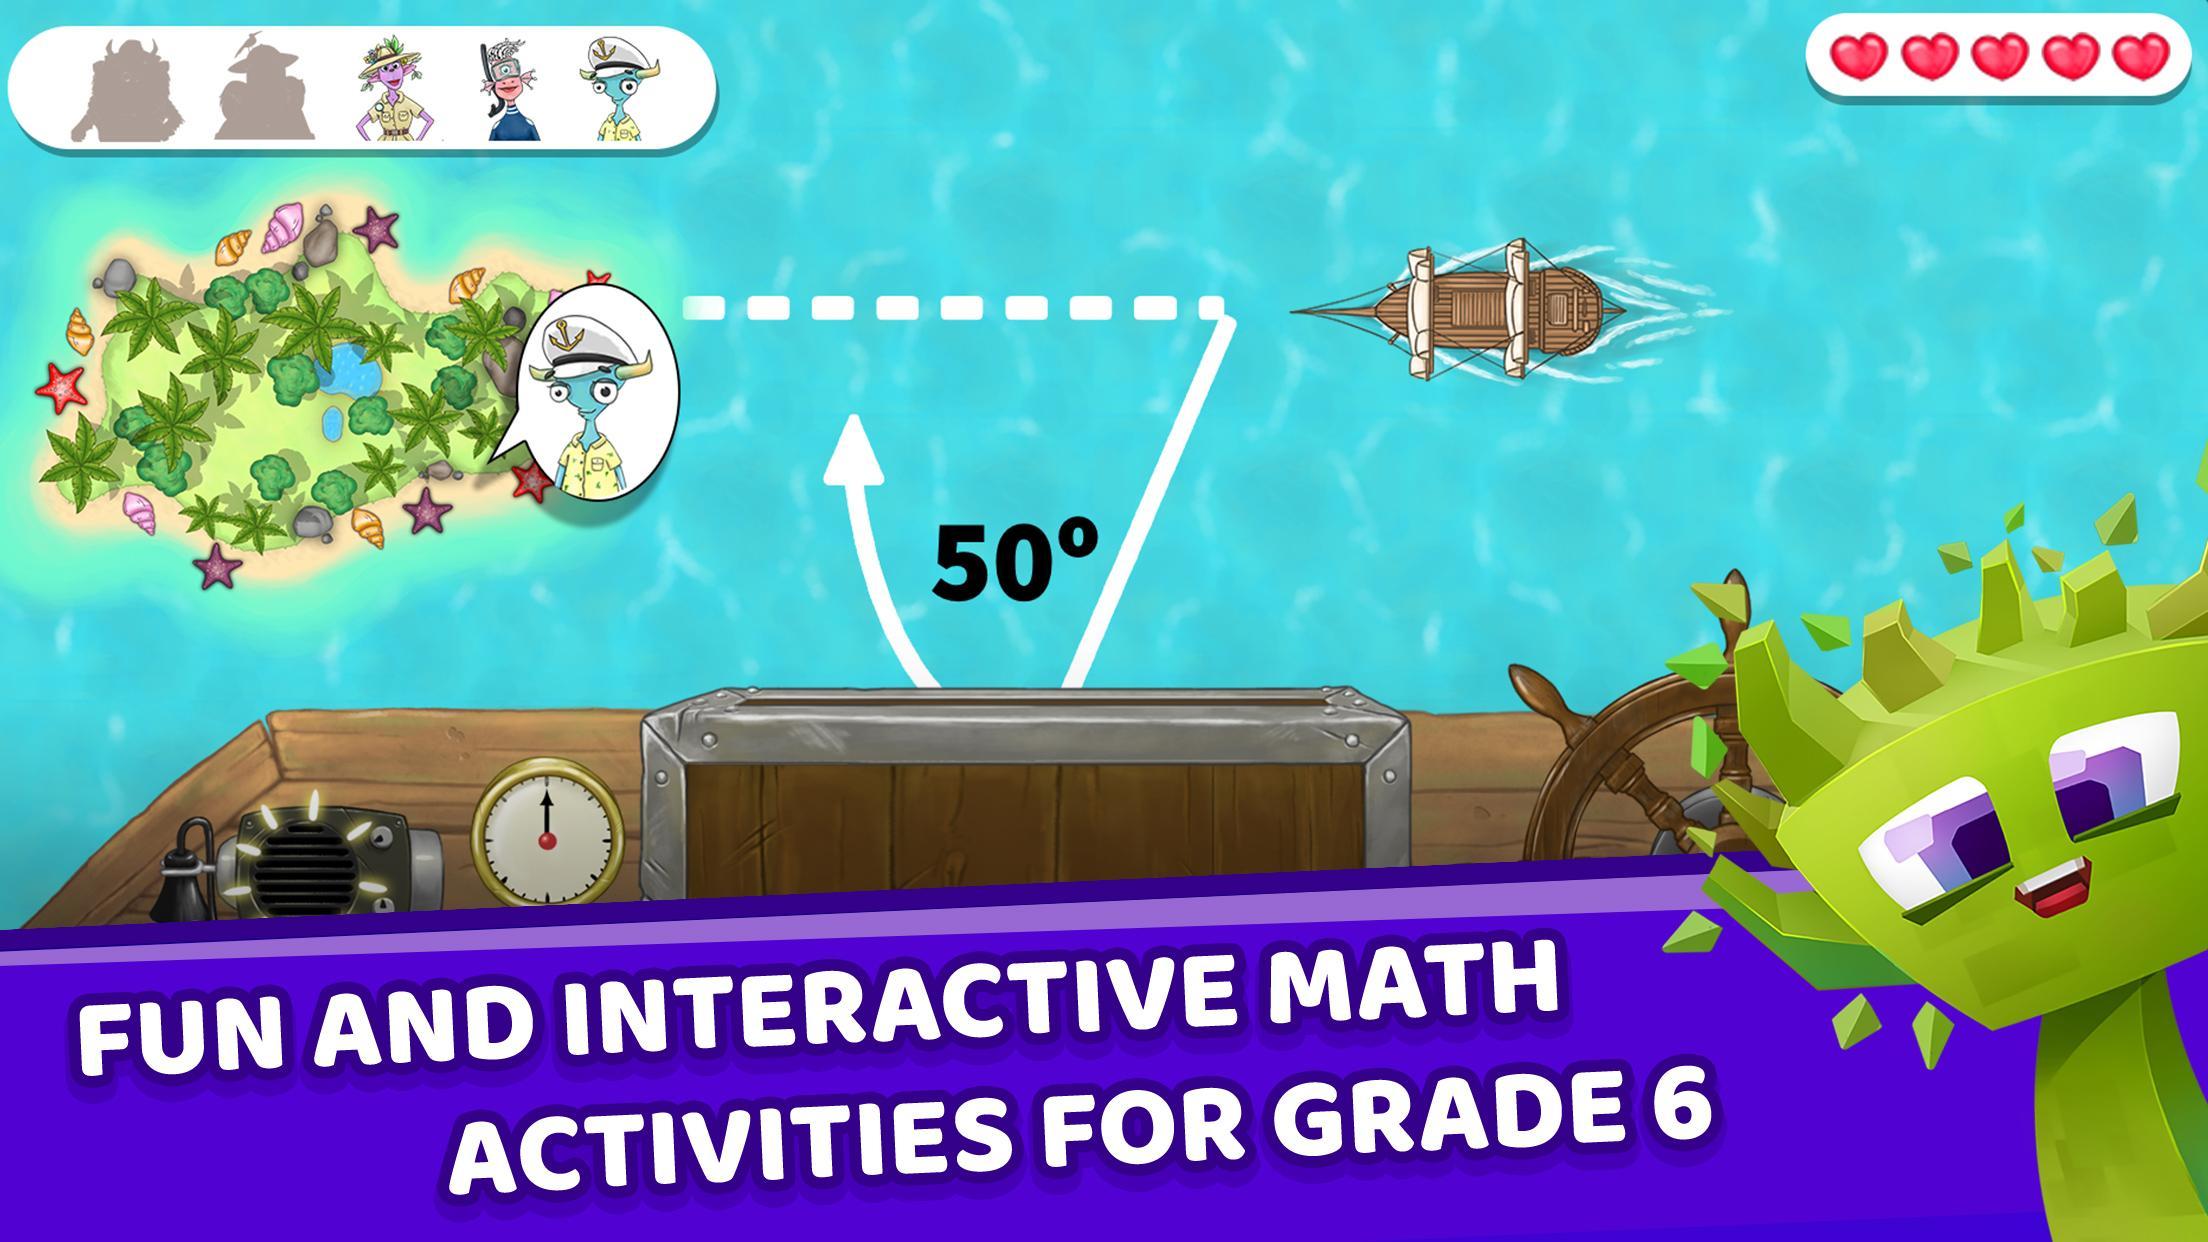 Matific Galaxy - Maths Games for 6th Graders 2.2.2 Screenshot 15